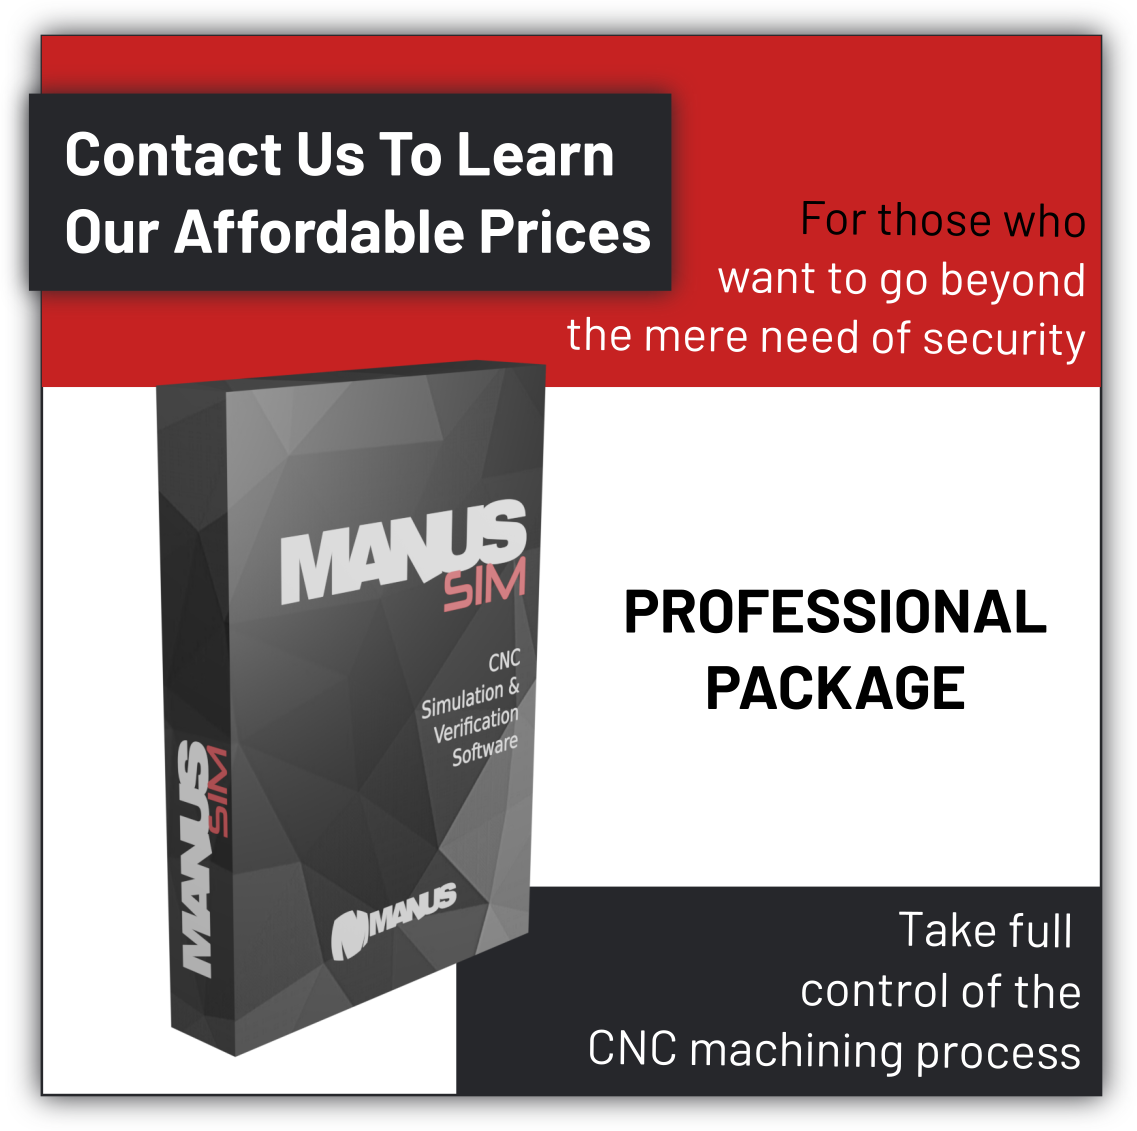 Develop CNC Post Processors